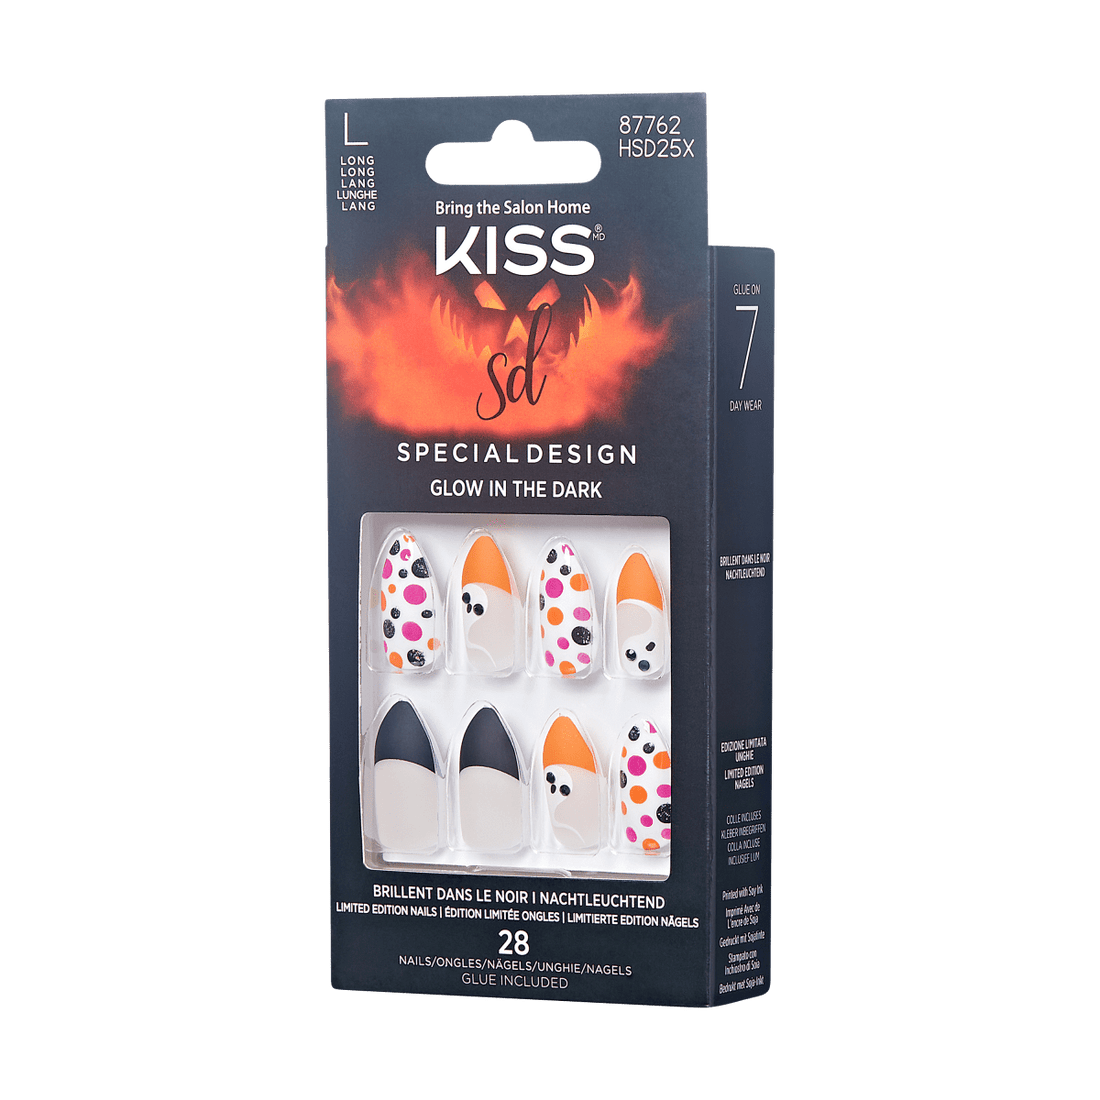 KISS Halloween Special Design Nails - Be Afraid